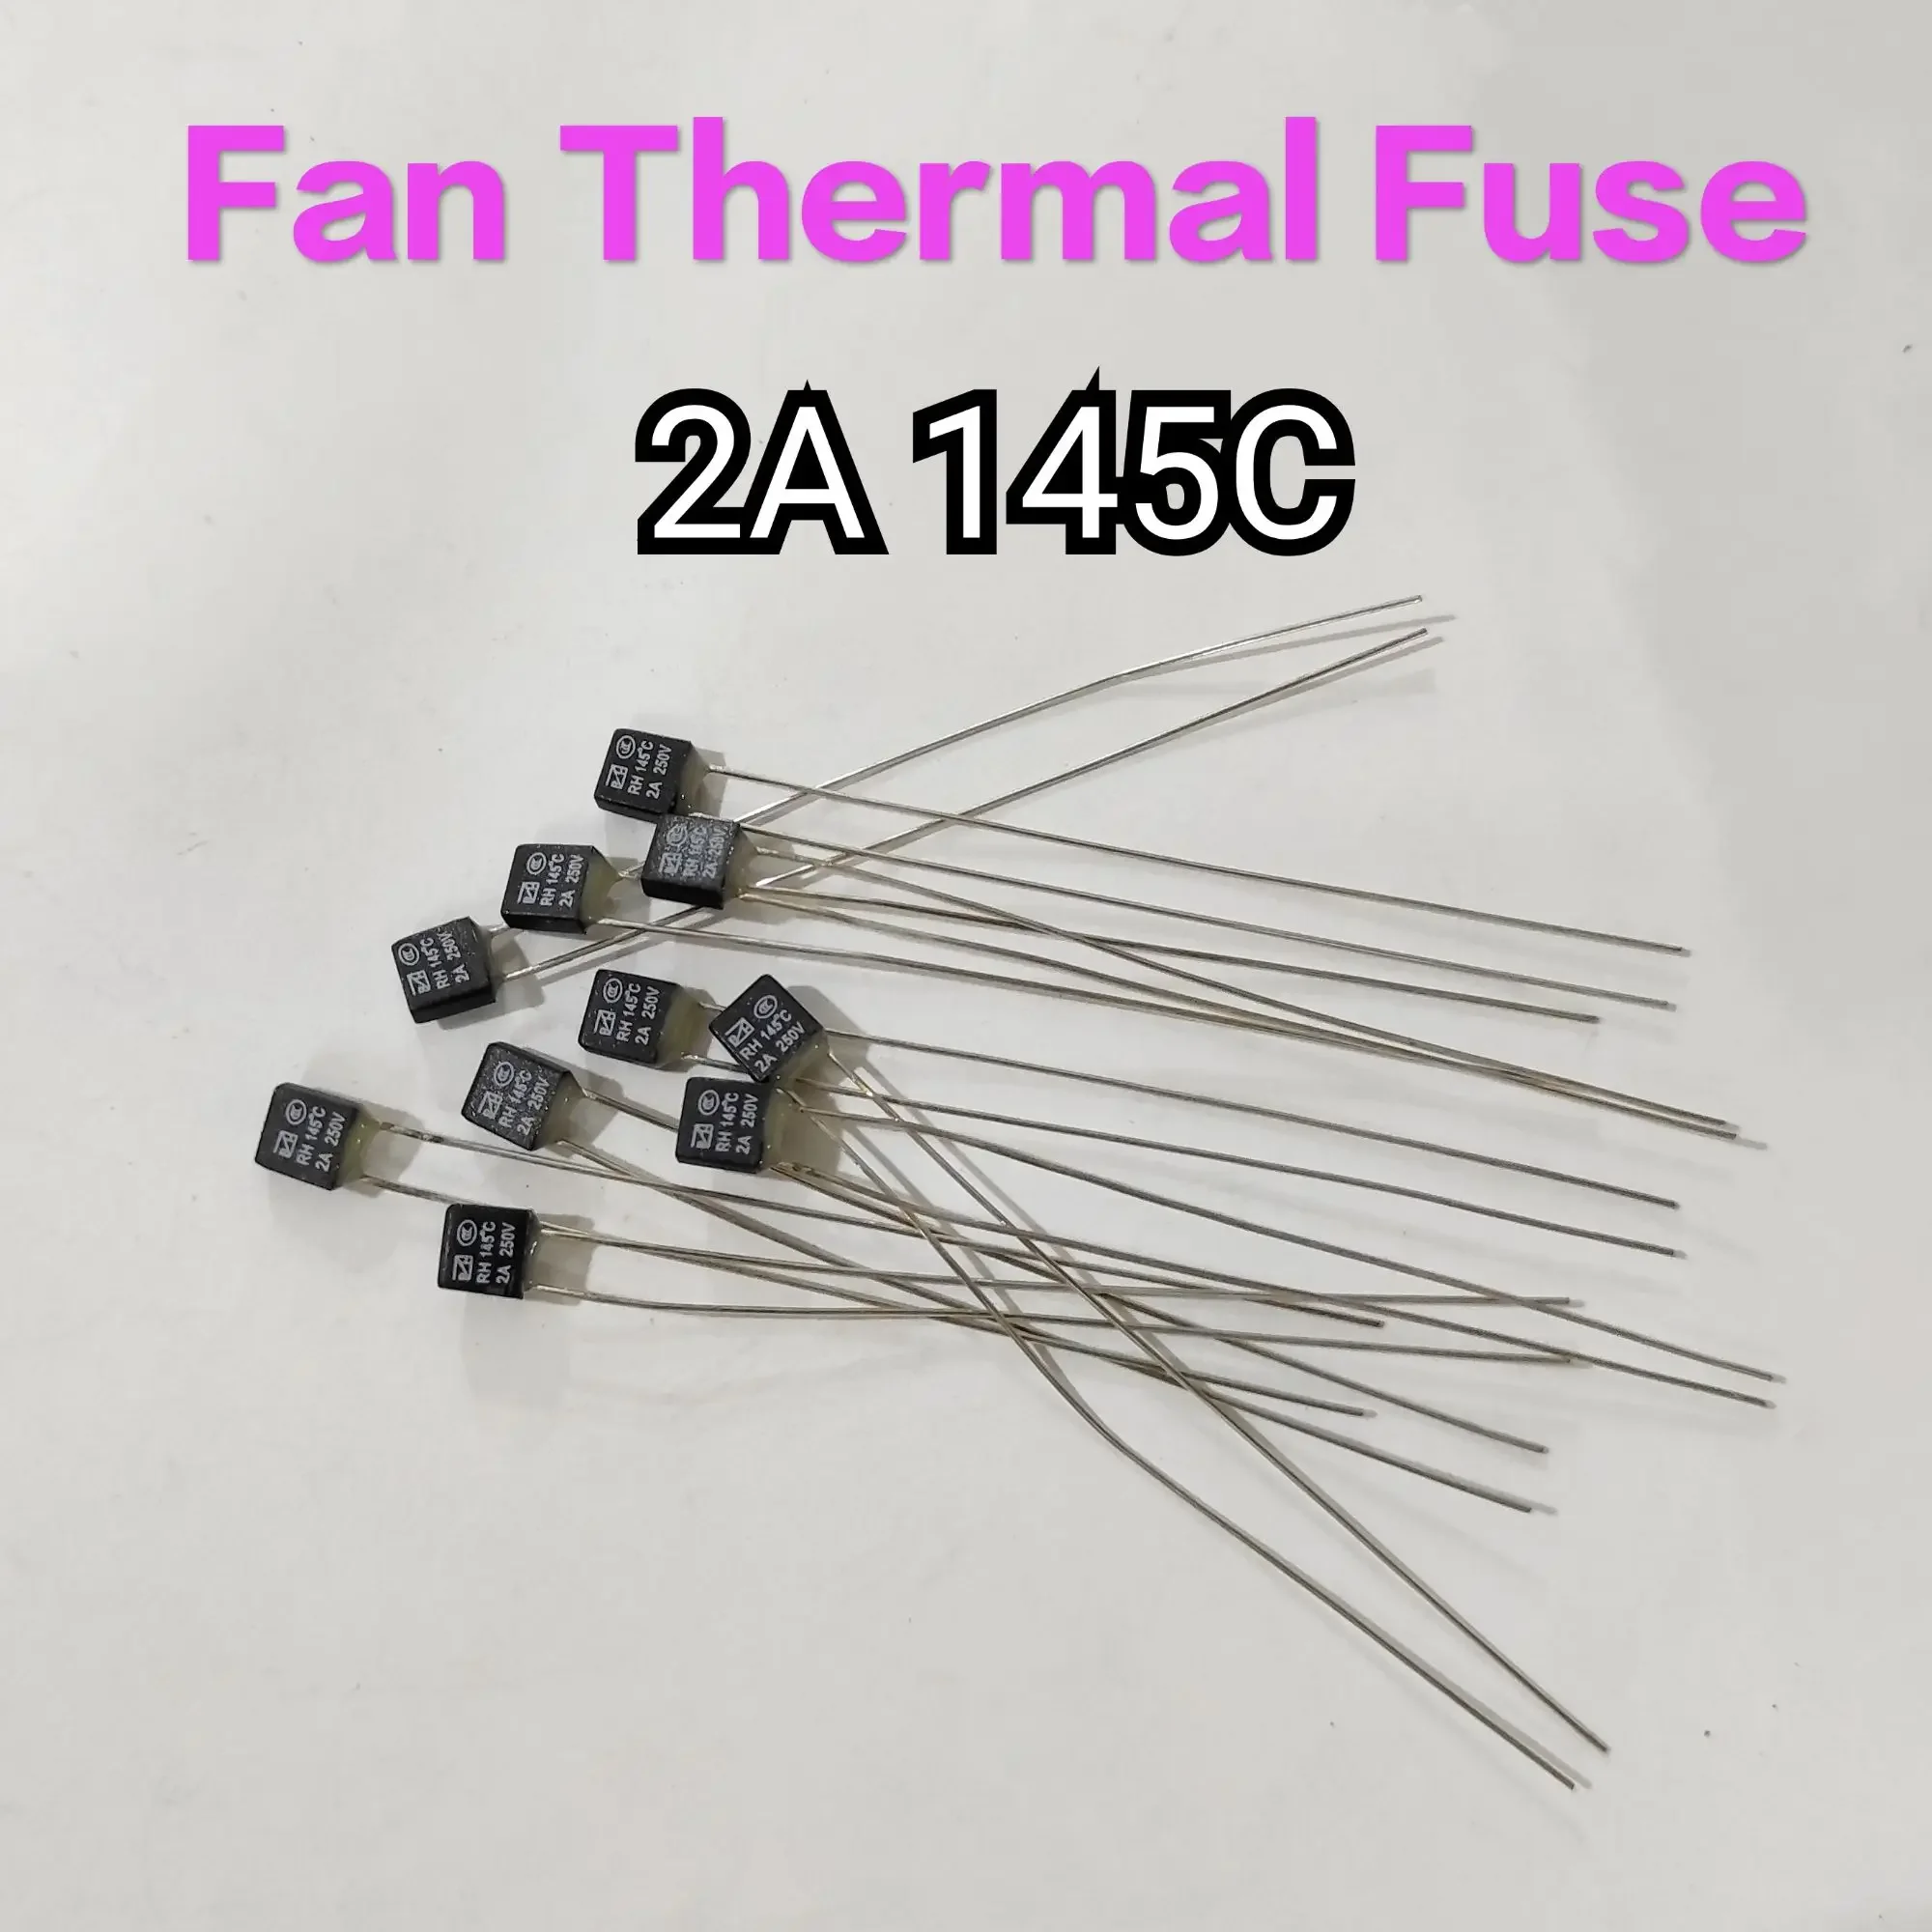 1 Biji 2A 145C 250V Fan Thermal Fuse Fius kioas 2a 145c